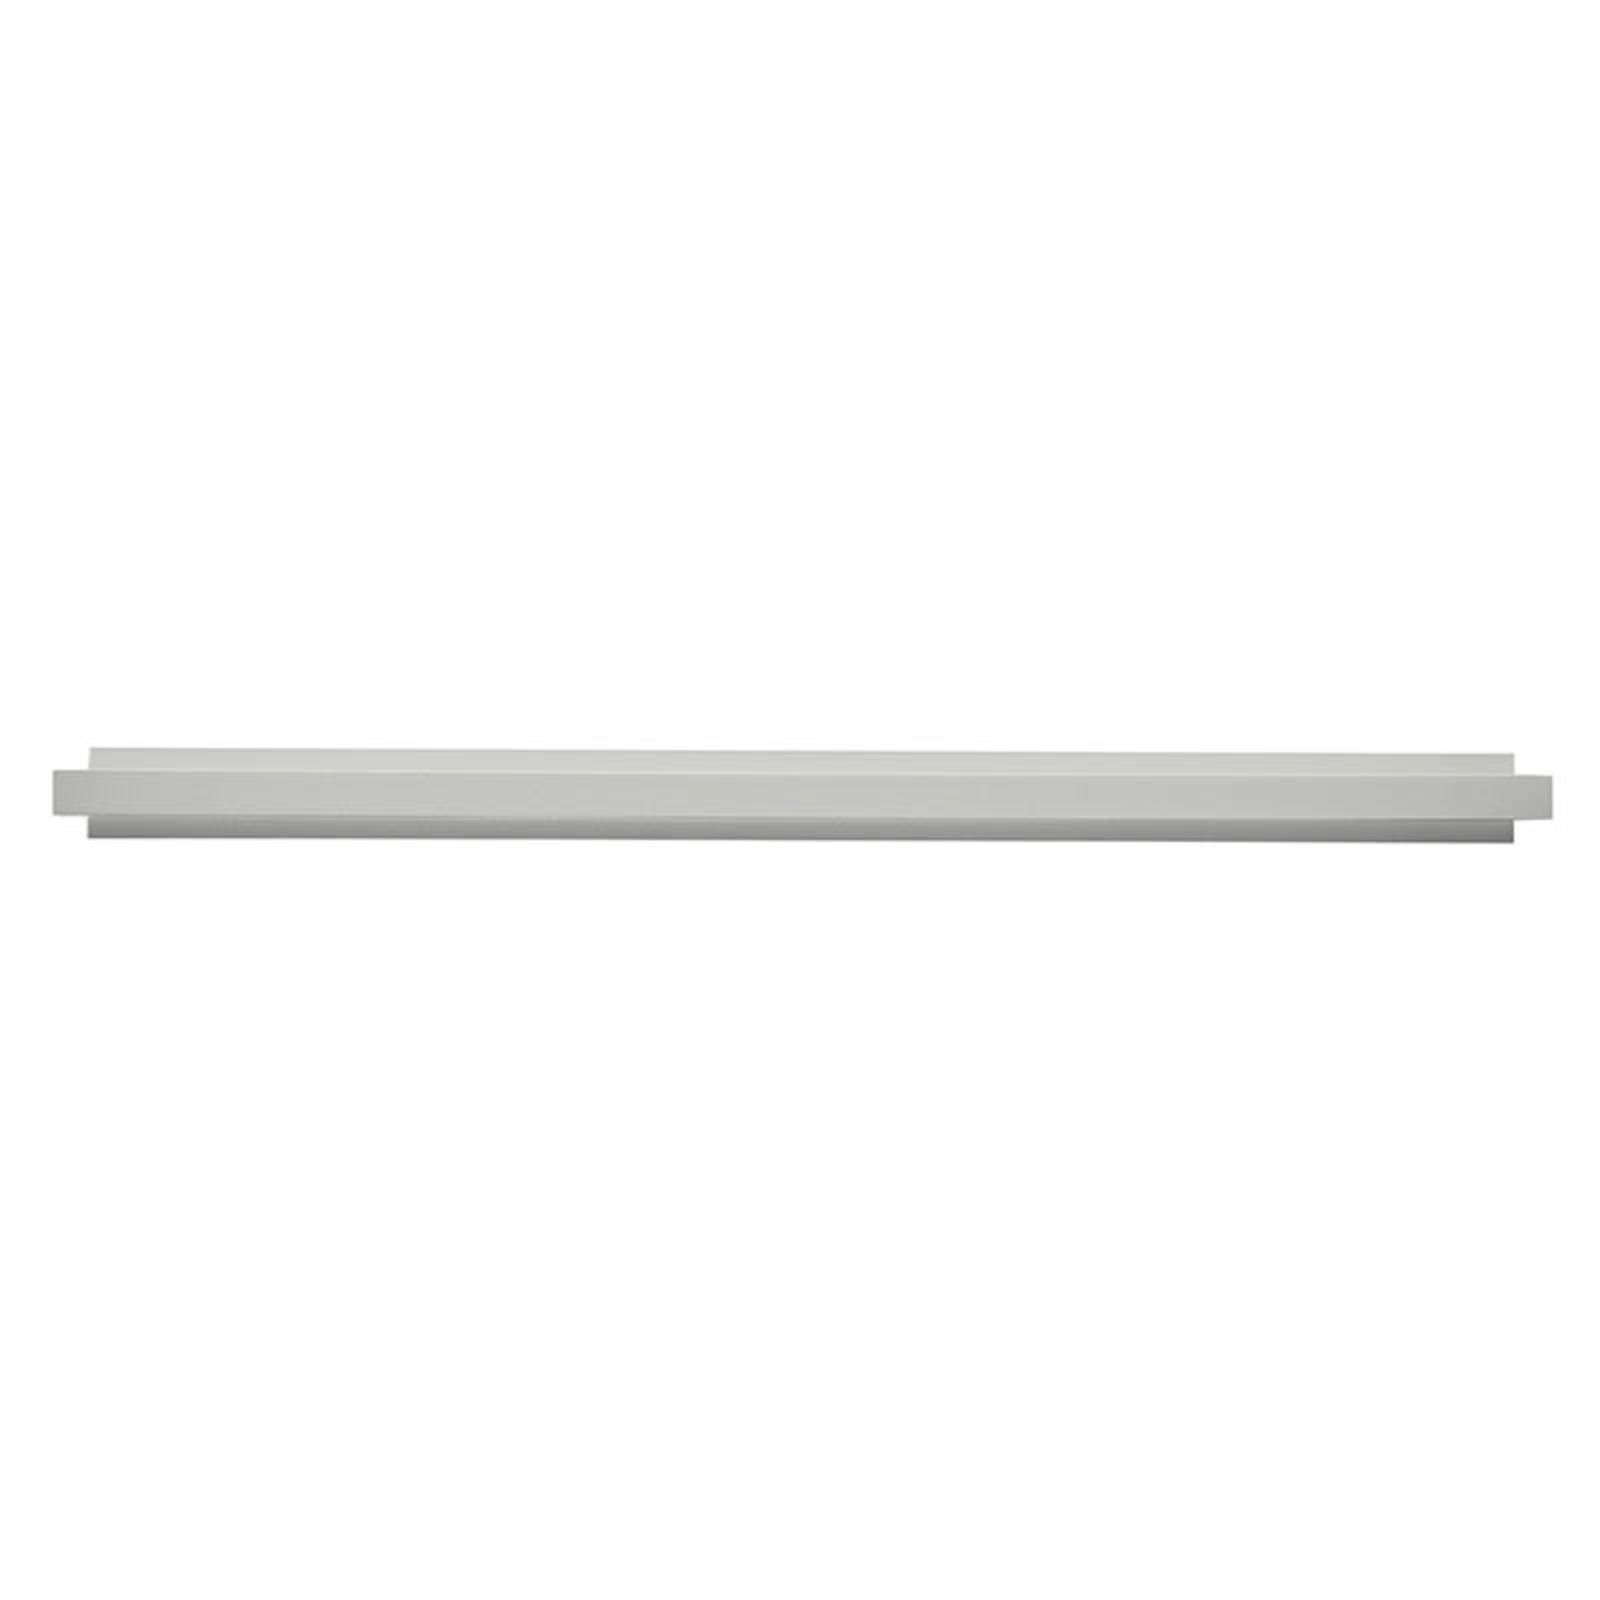 Stilnovo Nástenné LED svietidlo Tablet W1 šírka 96 cm biele, Obývacia izba / jedáleň, hliník, polykarbonát, 26W, L: 96 cm, K: 2cm